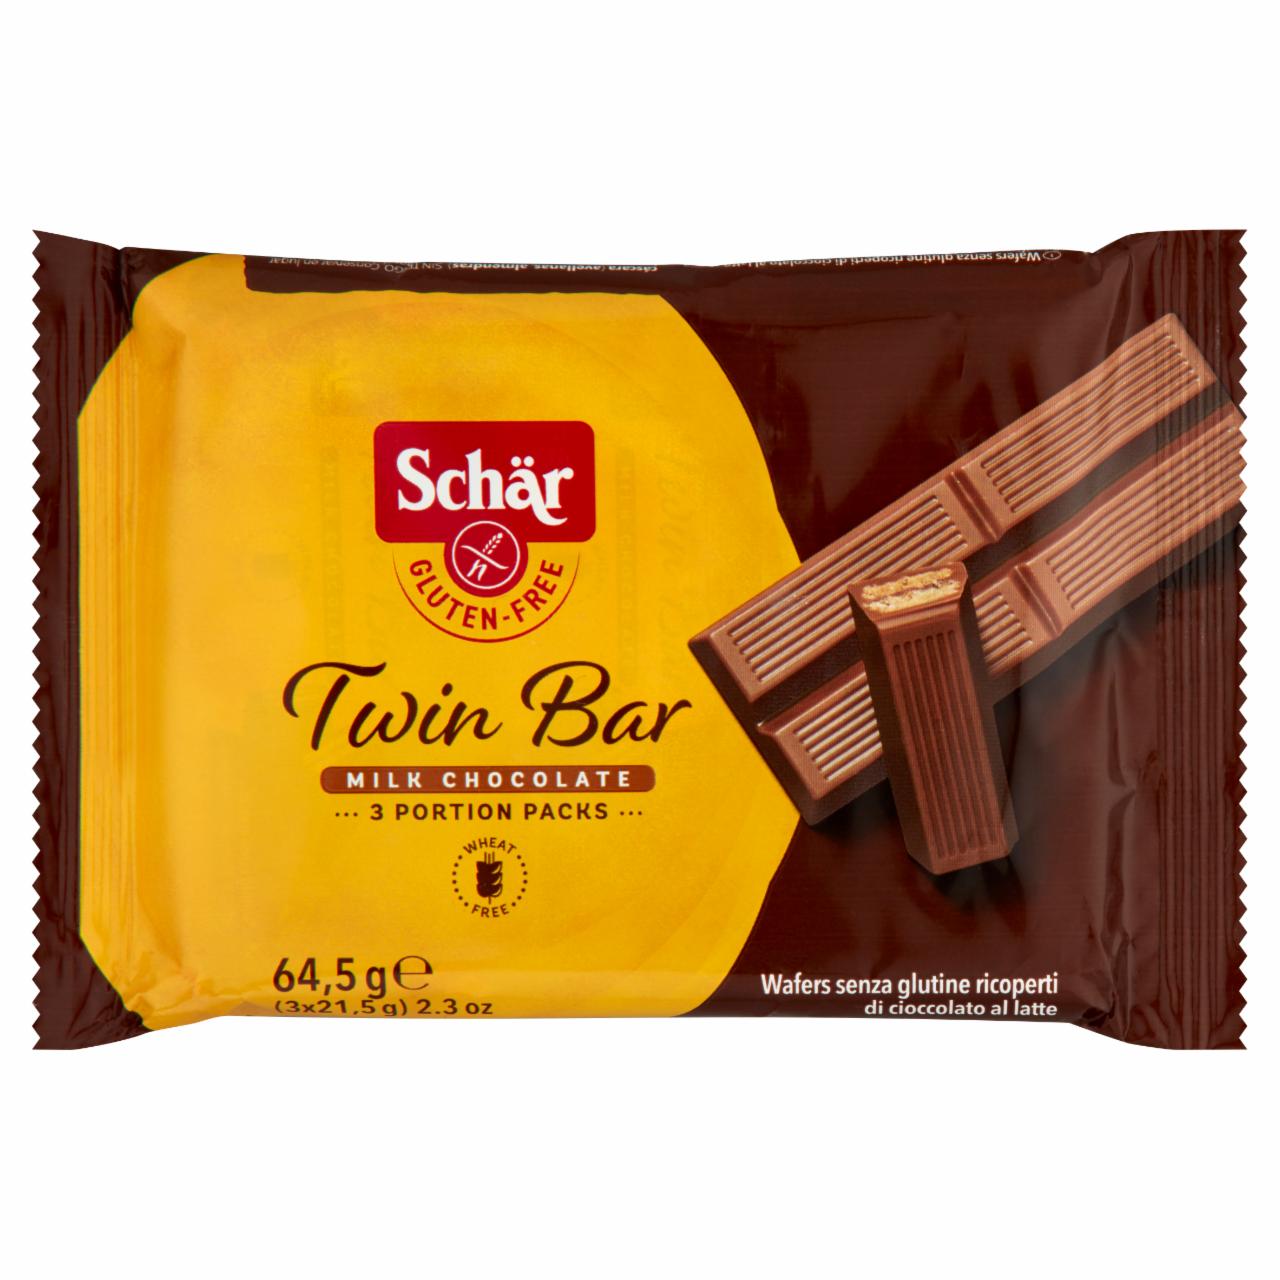 Képek - Schär Twin Bar gluténmentes tejcsokoládéval bevont ropogós ostya 3 x 21,5 g (64,5 g)